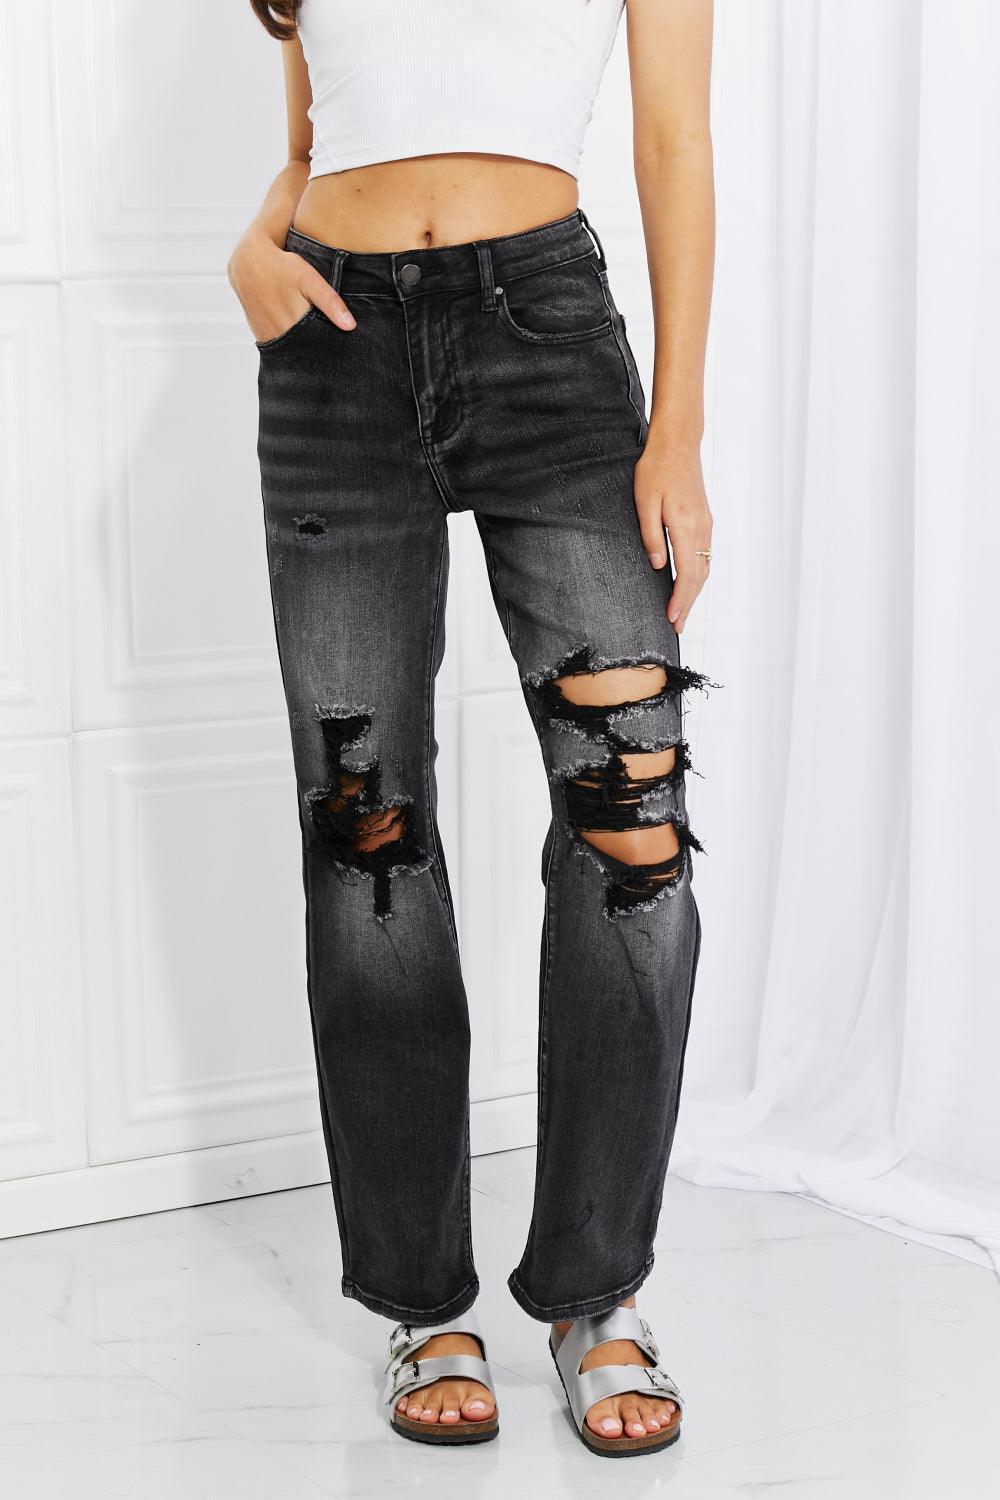 Rebel Girl Mid Rise Plus Size Black Distressed Jeans - MXSTUDIO.COM